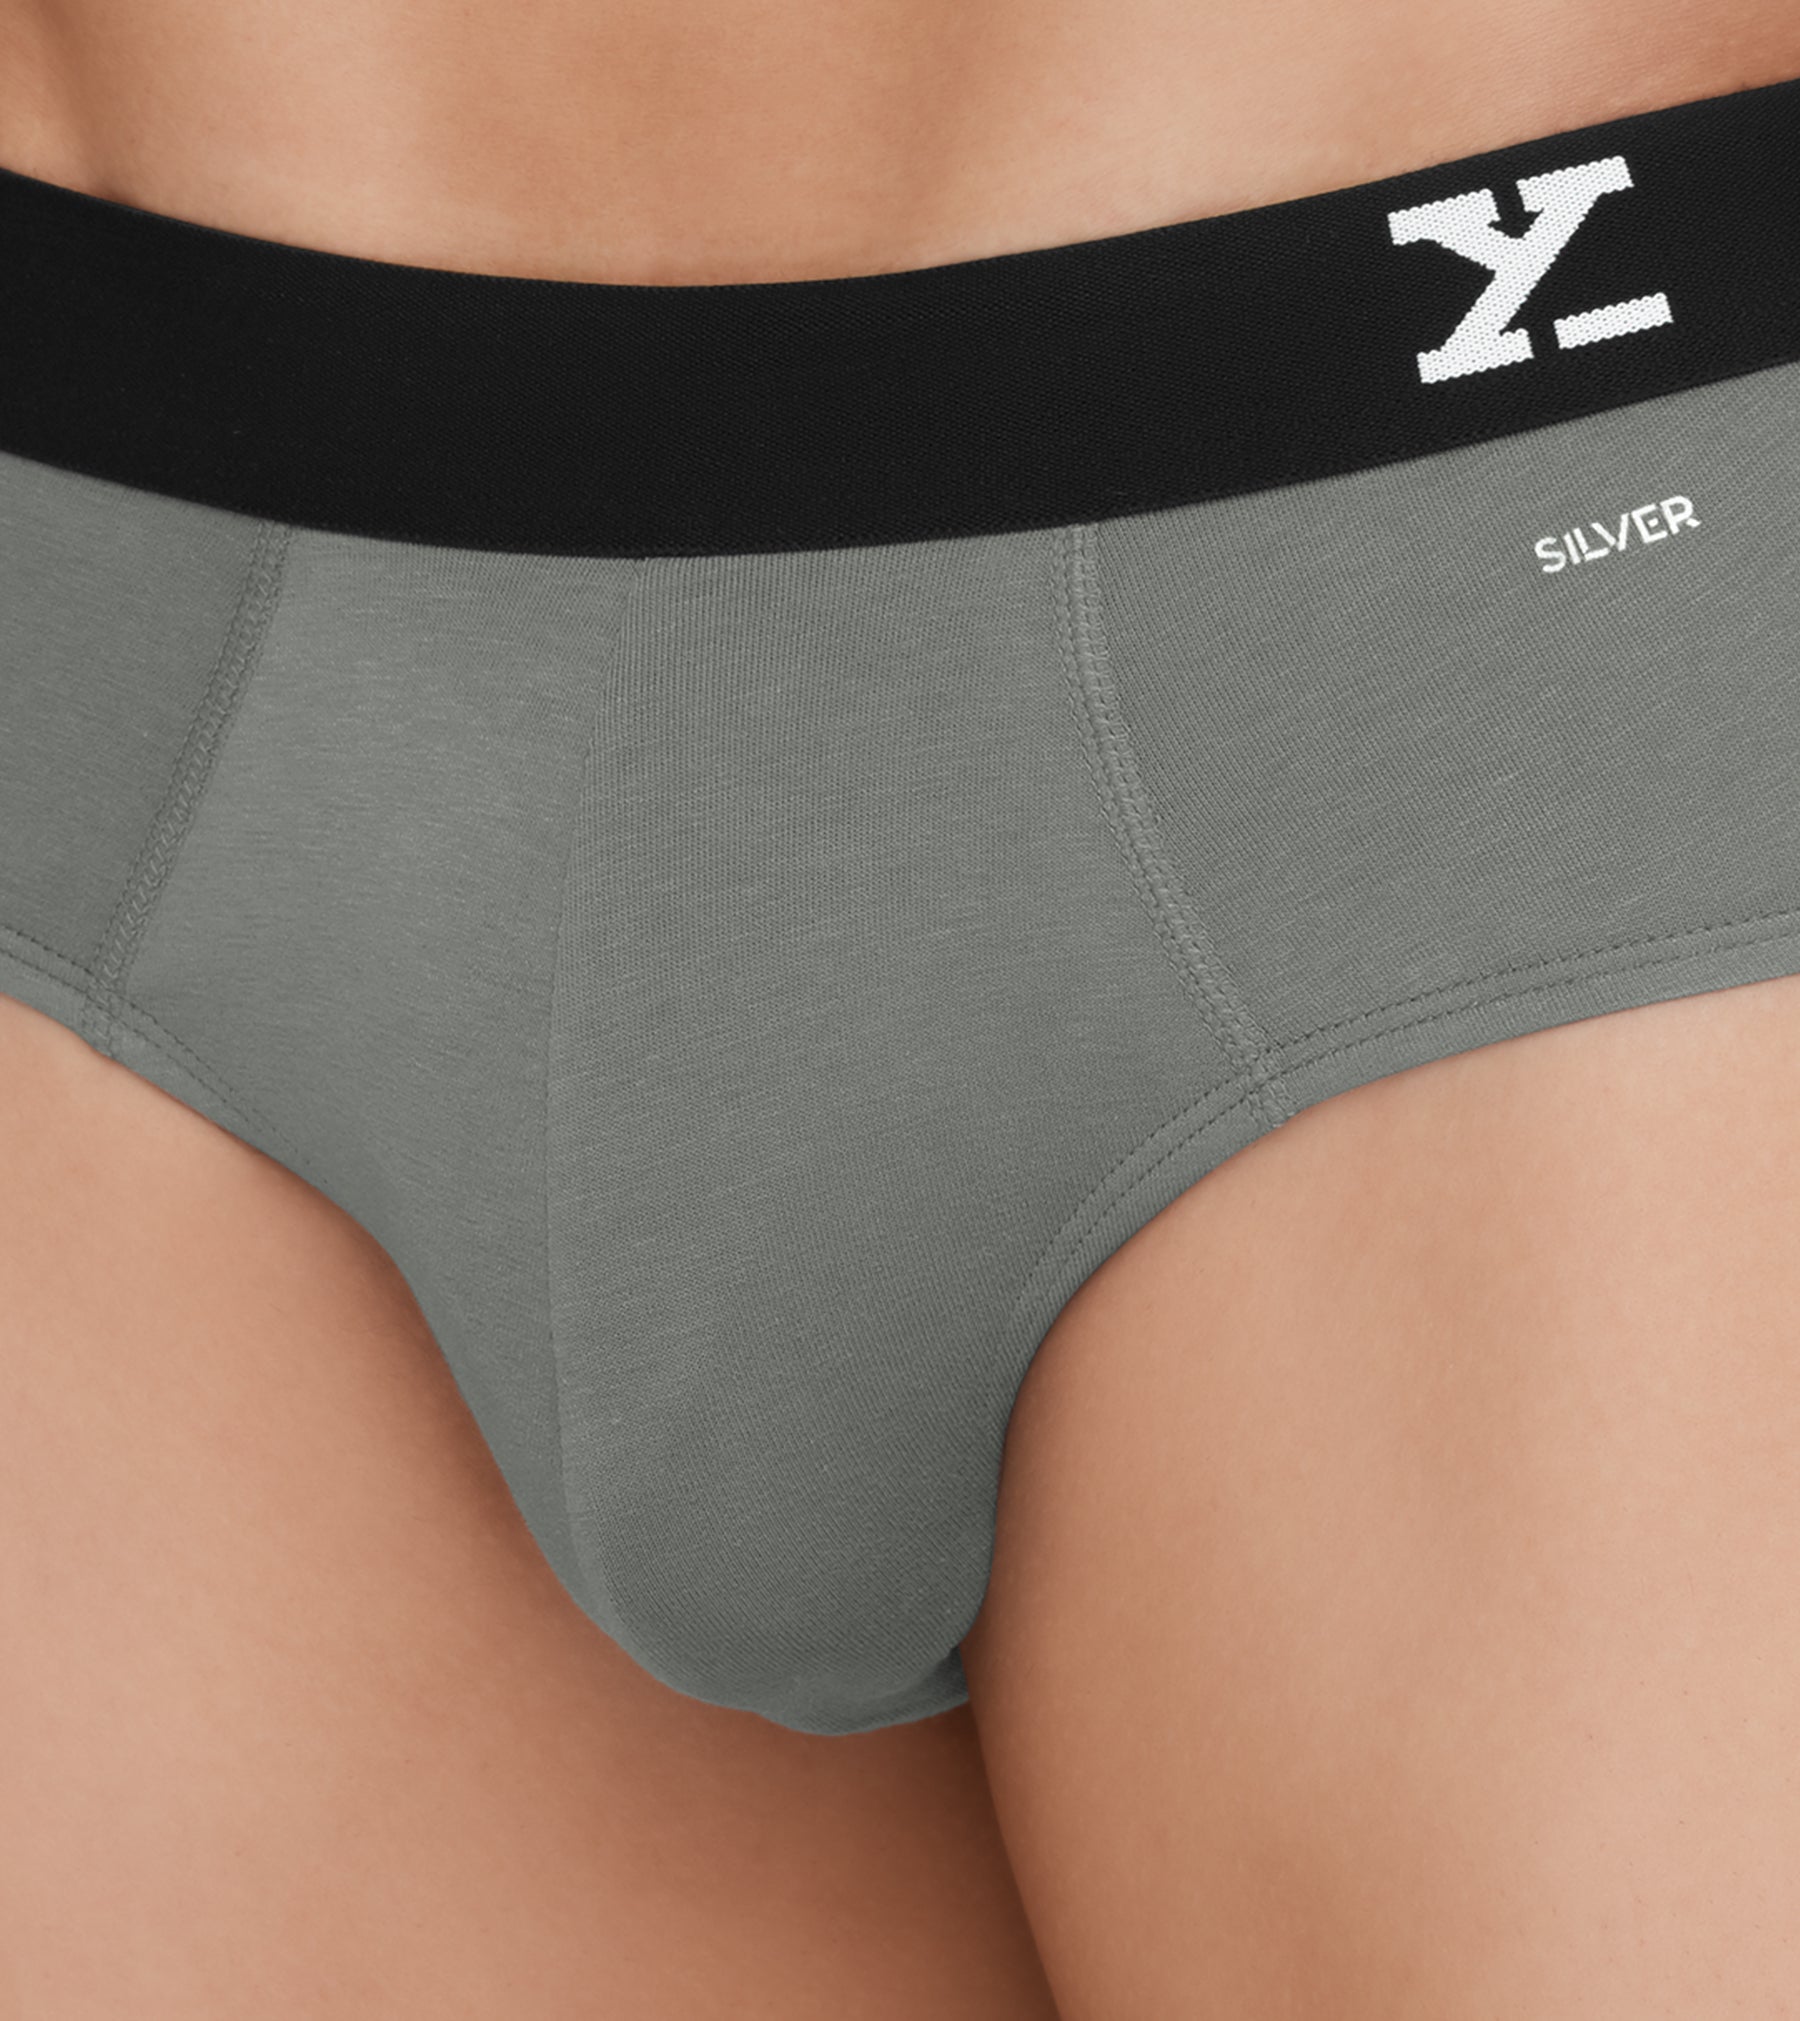 Aero Silver Cotton Briefs For Men Pack of 2(Aqua Blue, Grey) -  XYXX Mens Apparels